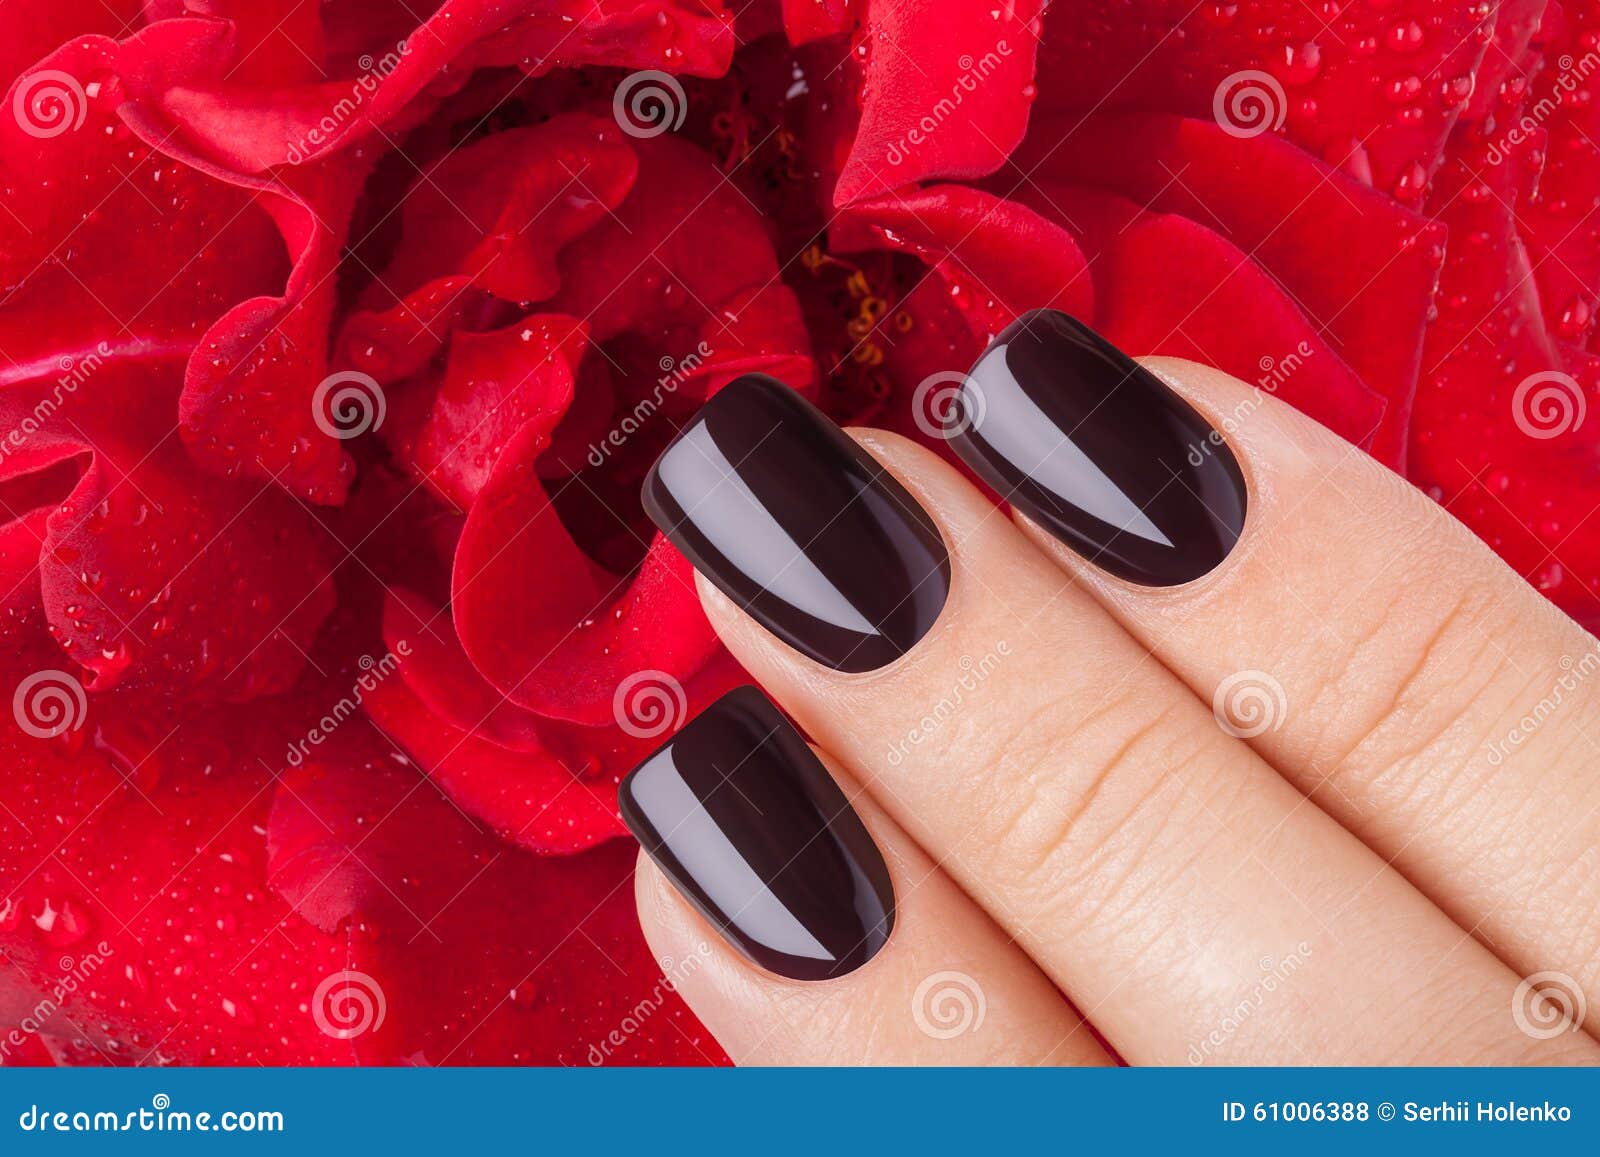 1. Dark Red Nail Polish Shades for Dark Autumn - wide 7